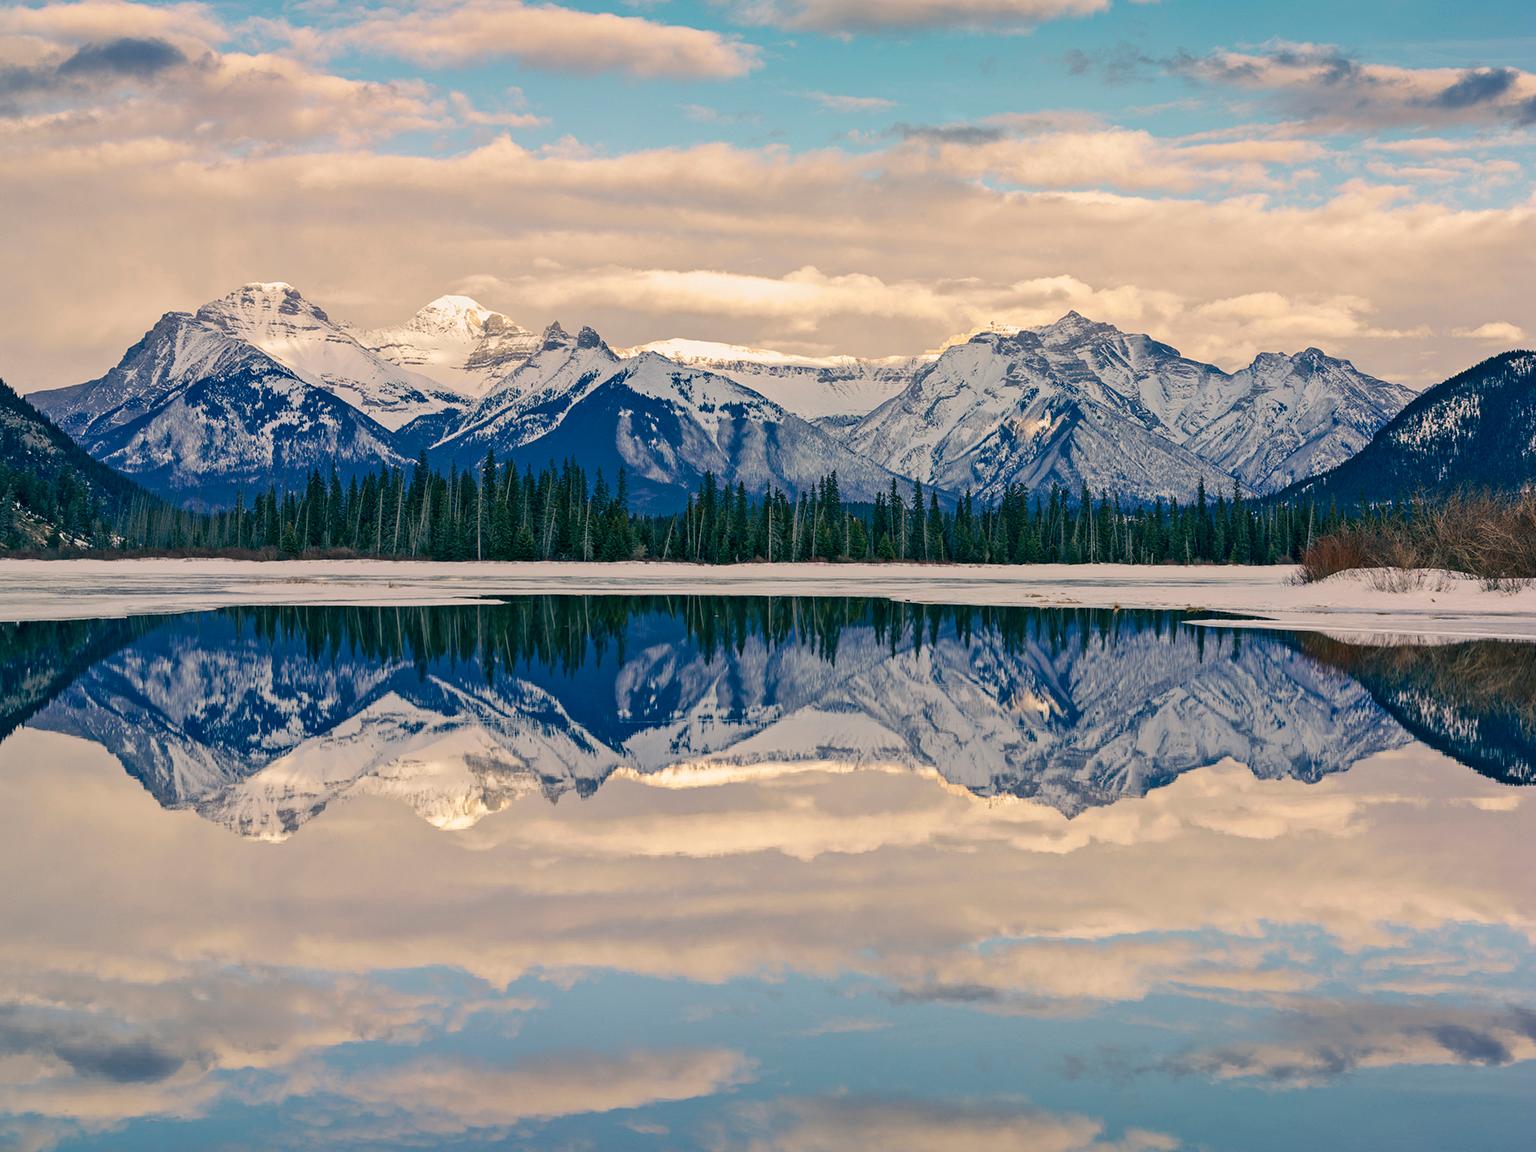  Cosmo Condina Color Photograph - "Vermillion Lakes I", Banff National Park